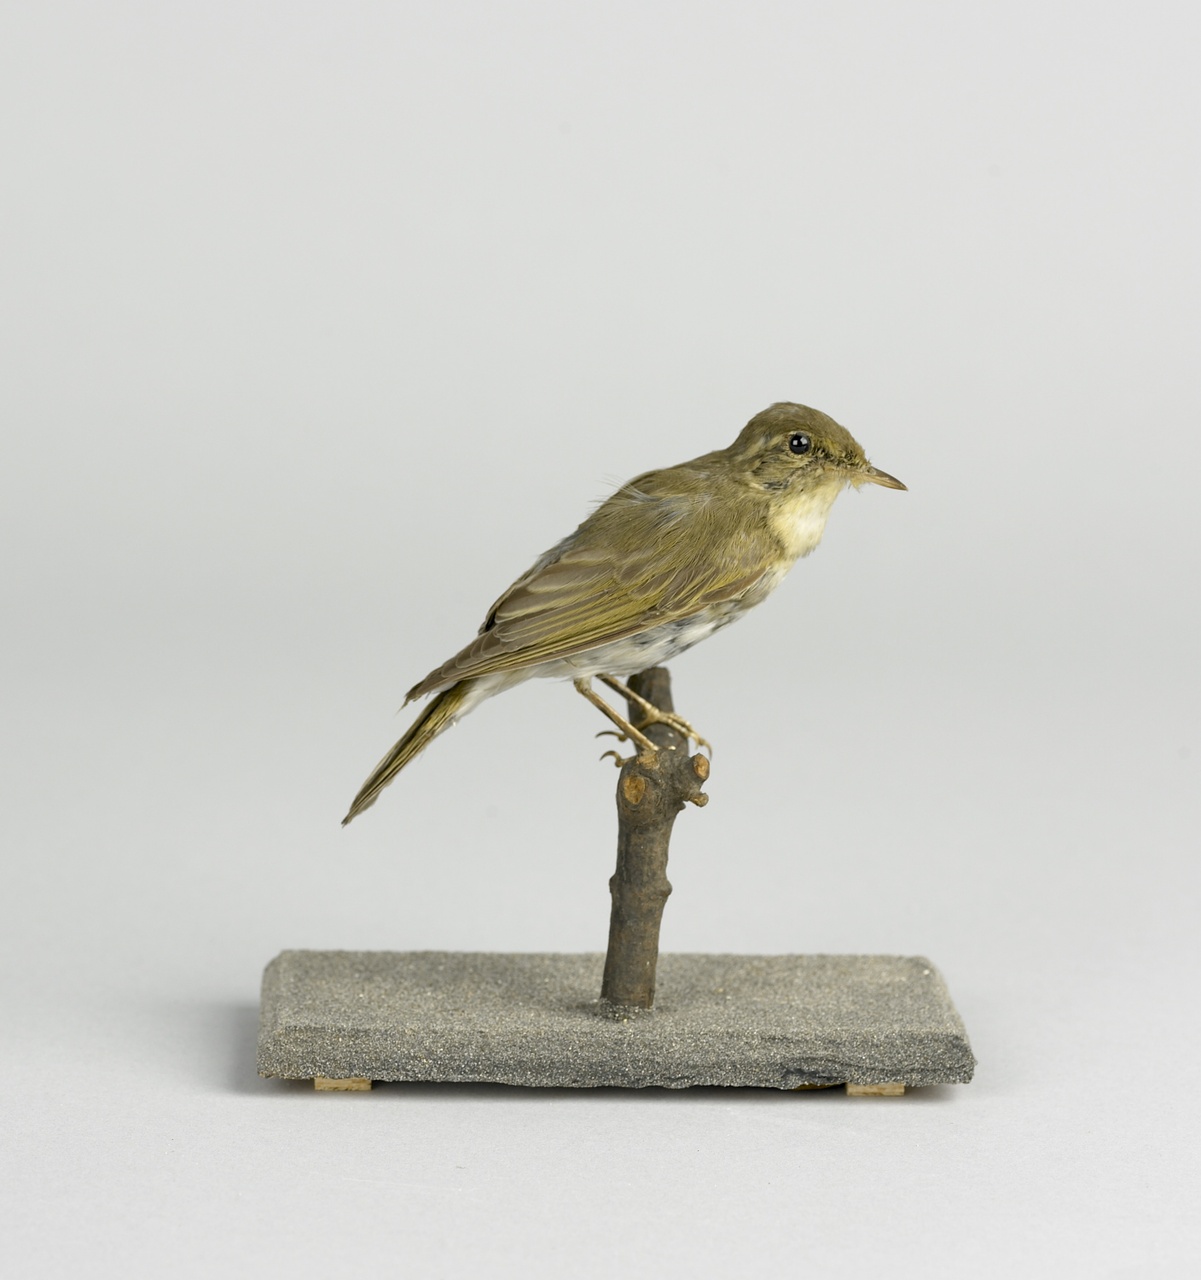 Phylloscopus sibilatrix (Bechstein, 1793), Fluiter, opgezette vogel